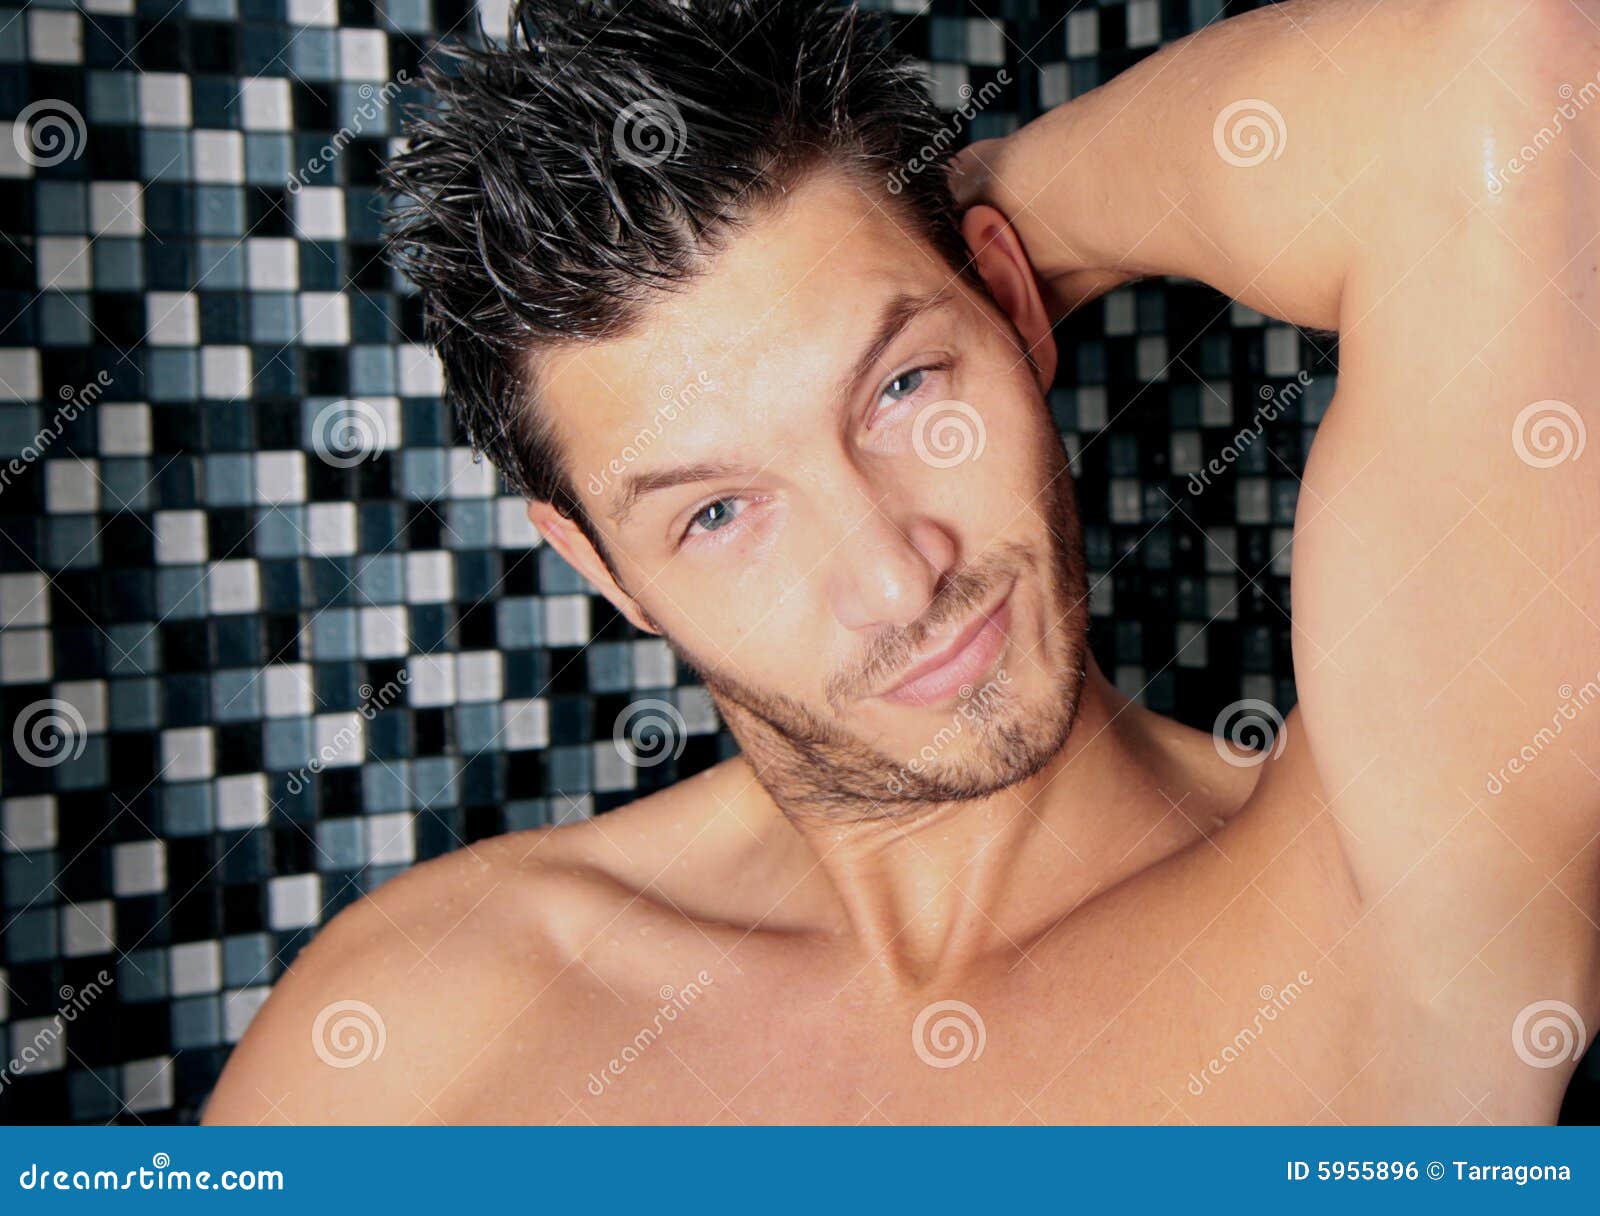 Shower boy stock photo. Image of shower, mosaic, male - 5955896